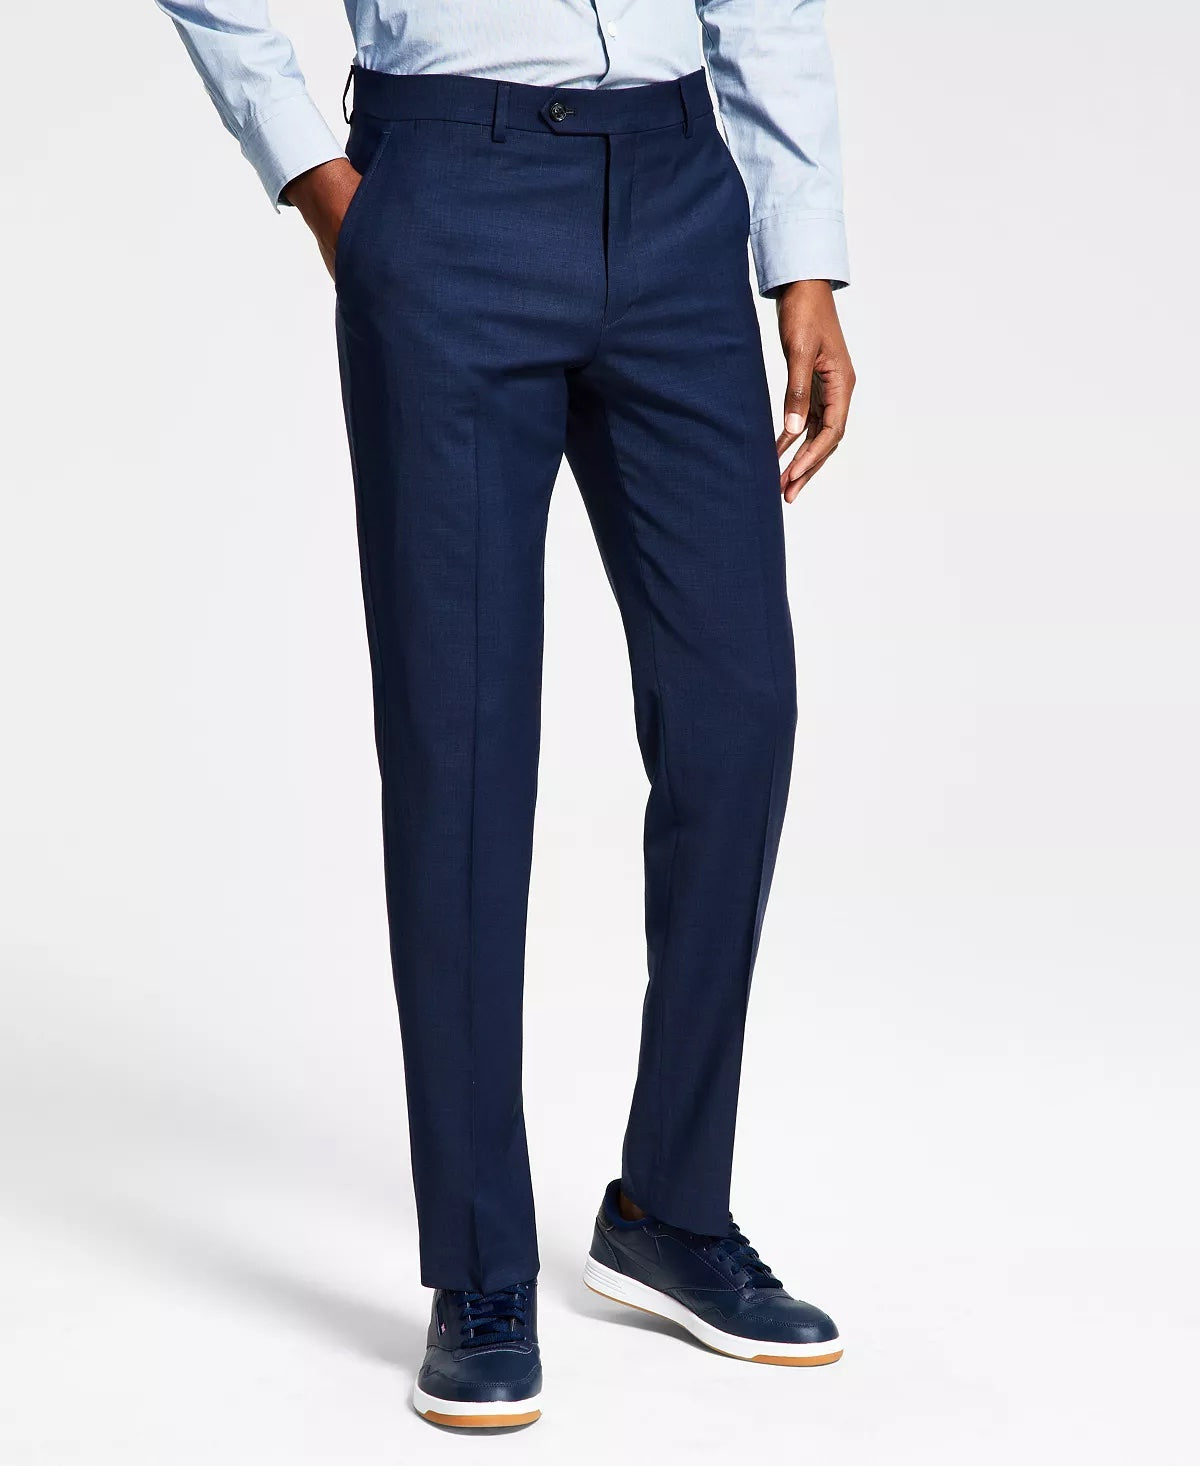 Tommy Hilfiger Mens Modern Fit TH Flex Suit Dress Pants Blue 42 x 30 Sharkskin